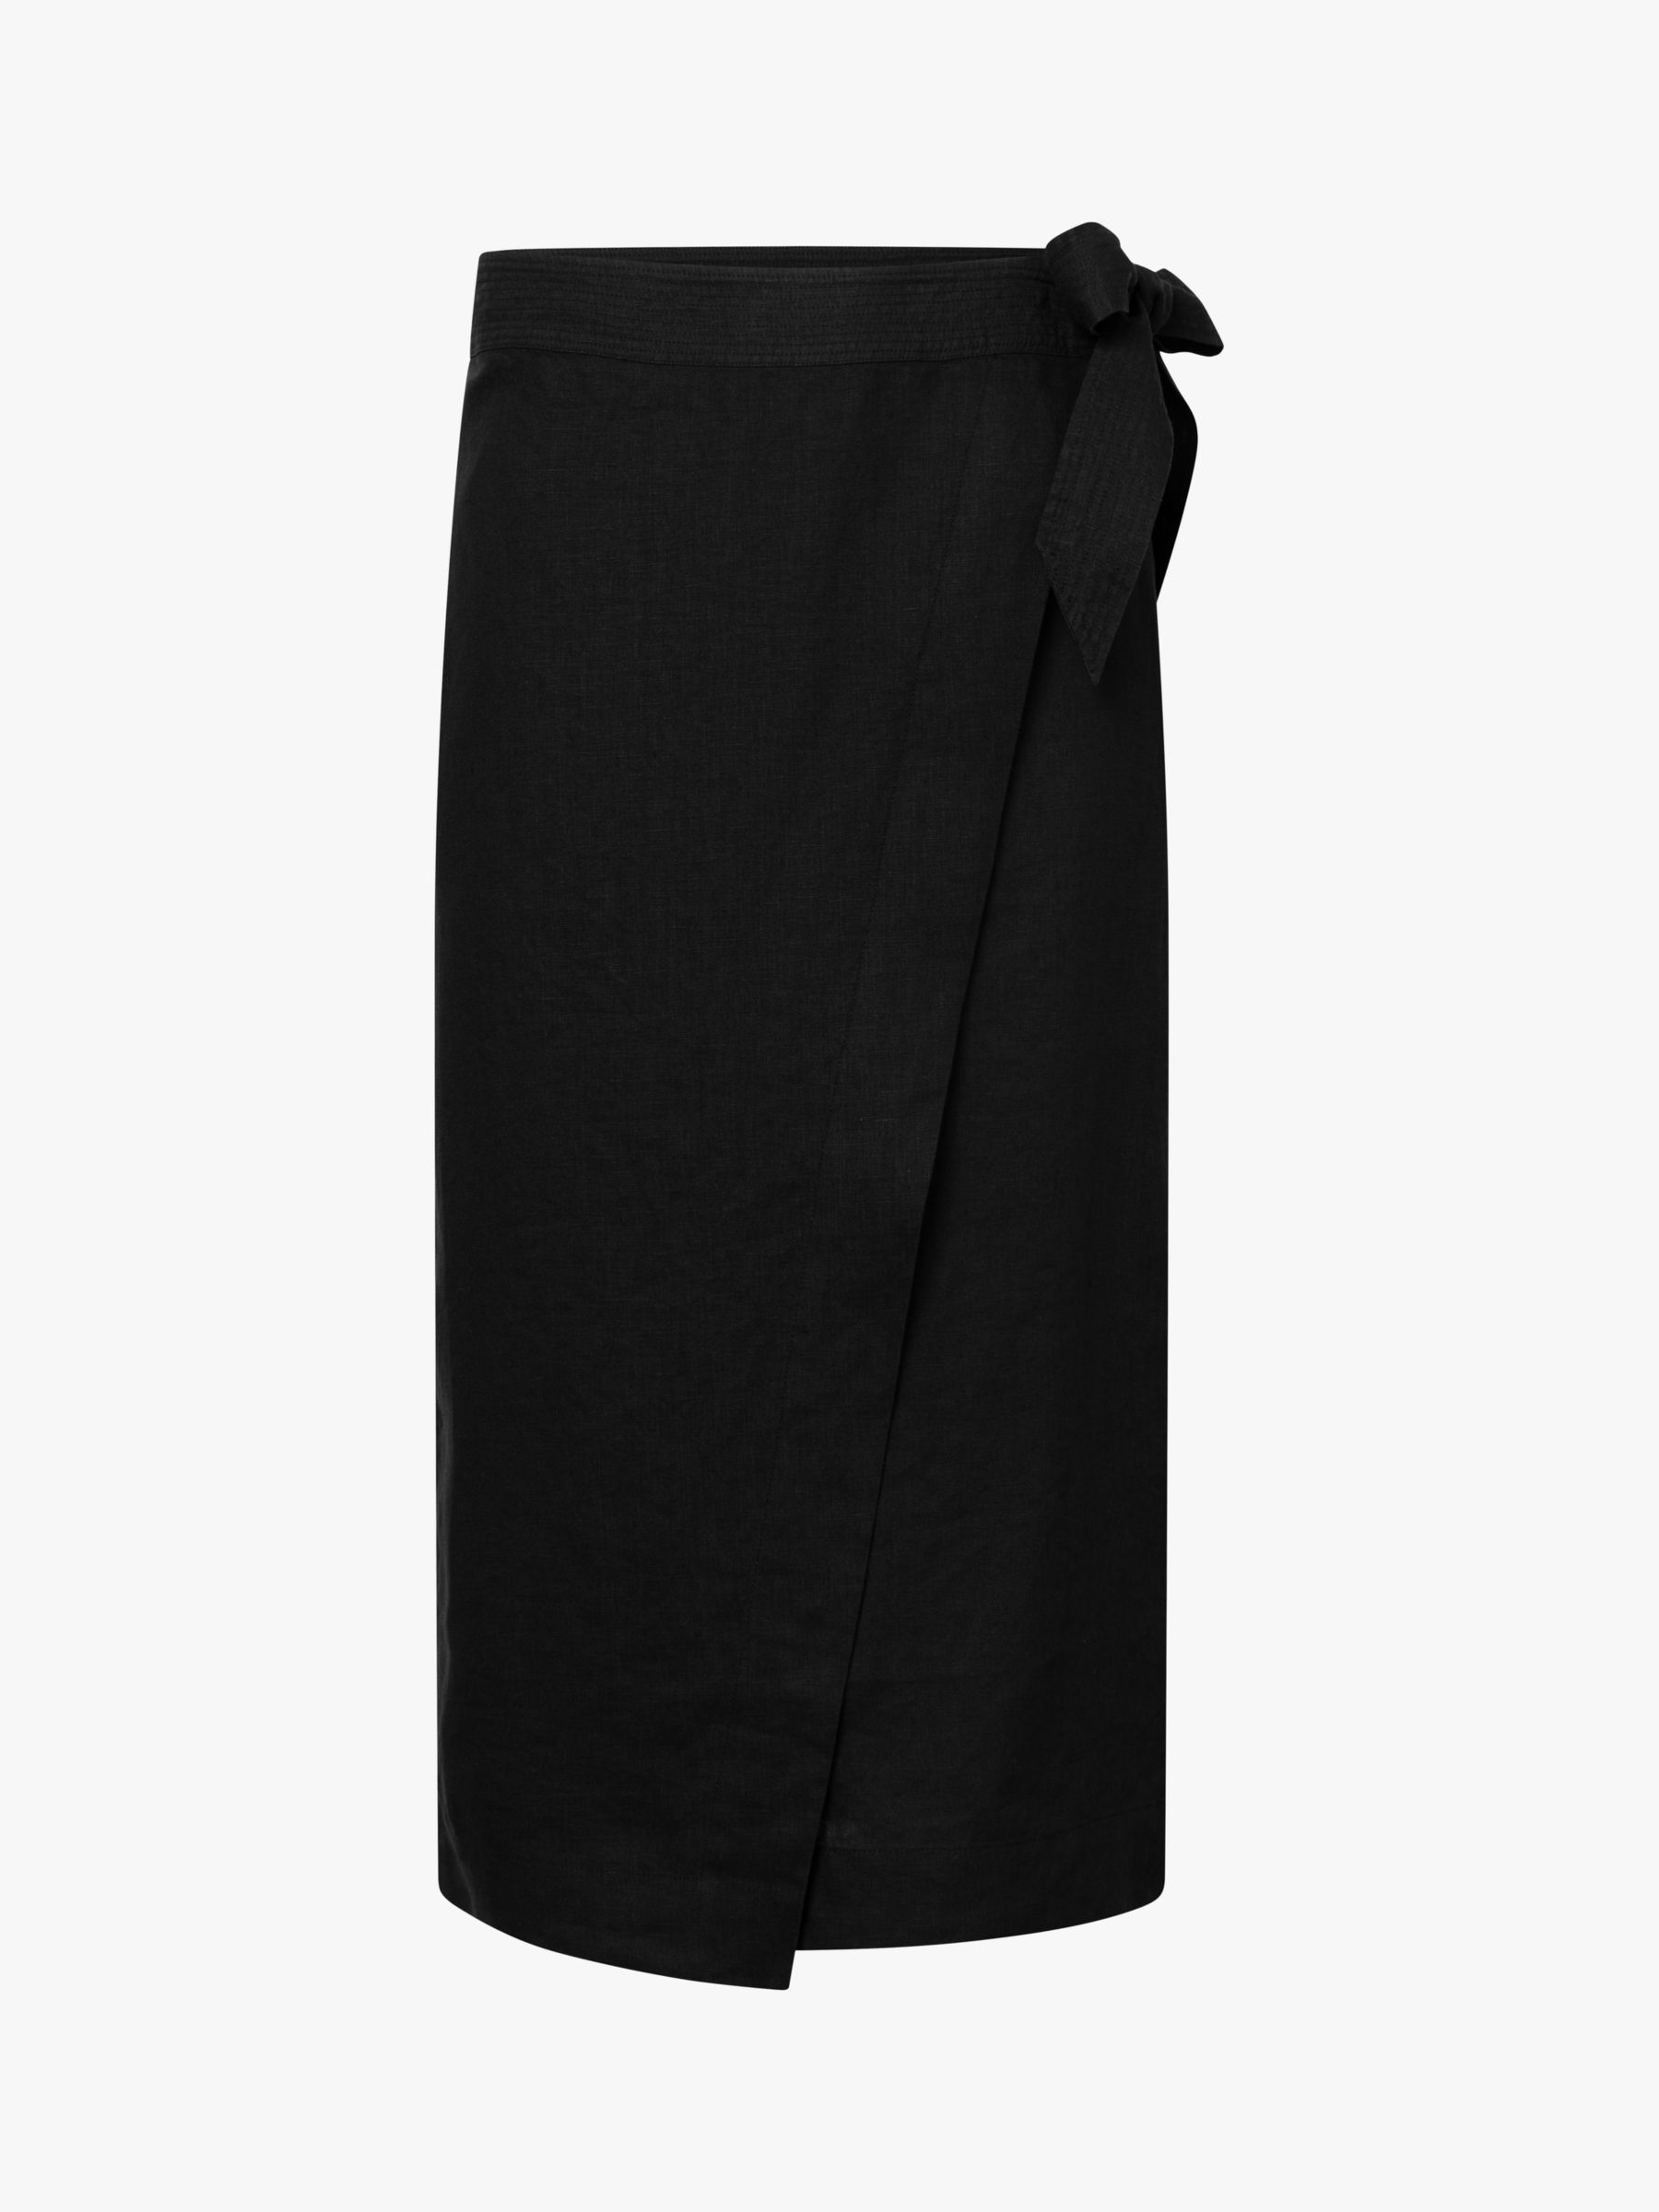 Twist & Tango Vivenne Linen Wrap Midi Skirt, Black, 8